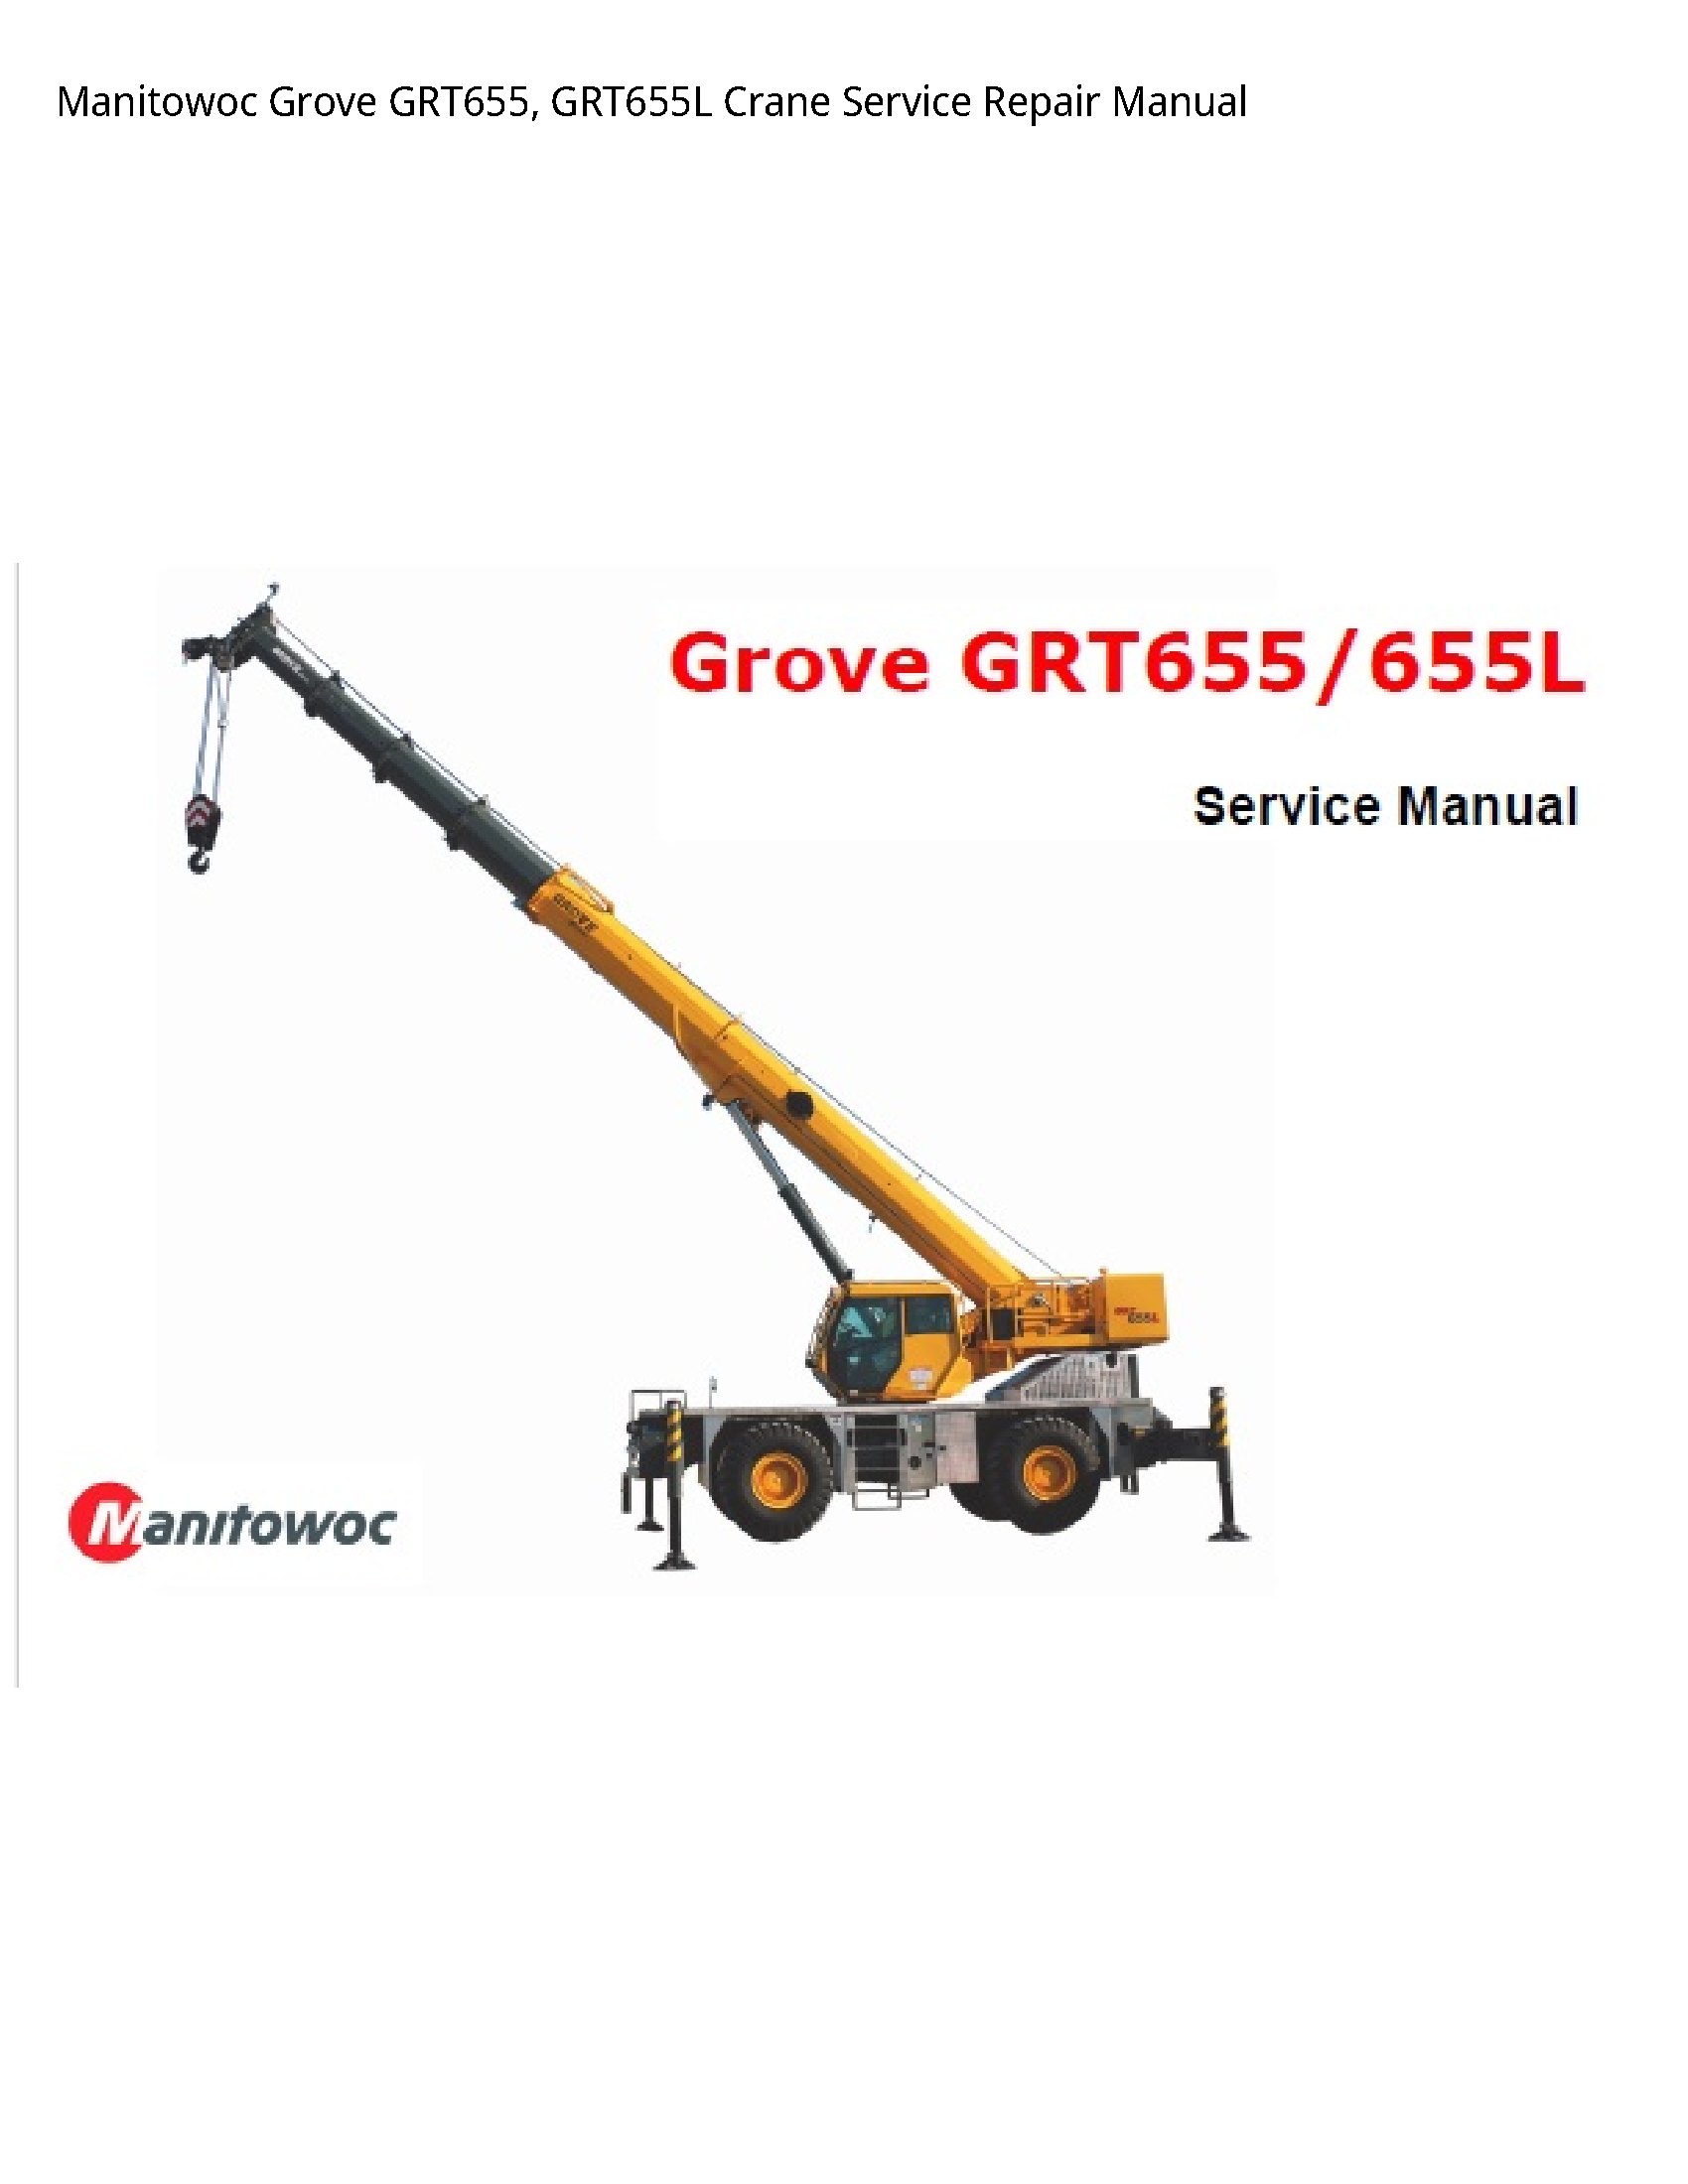 Manitowoc GRT655 Grove Crane manual